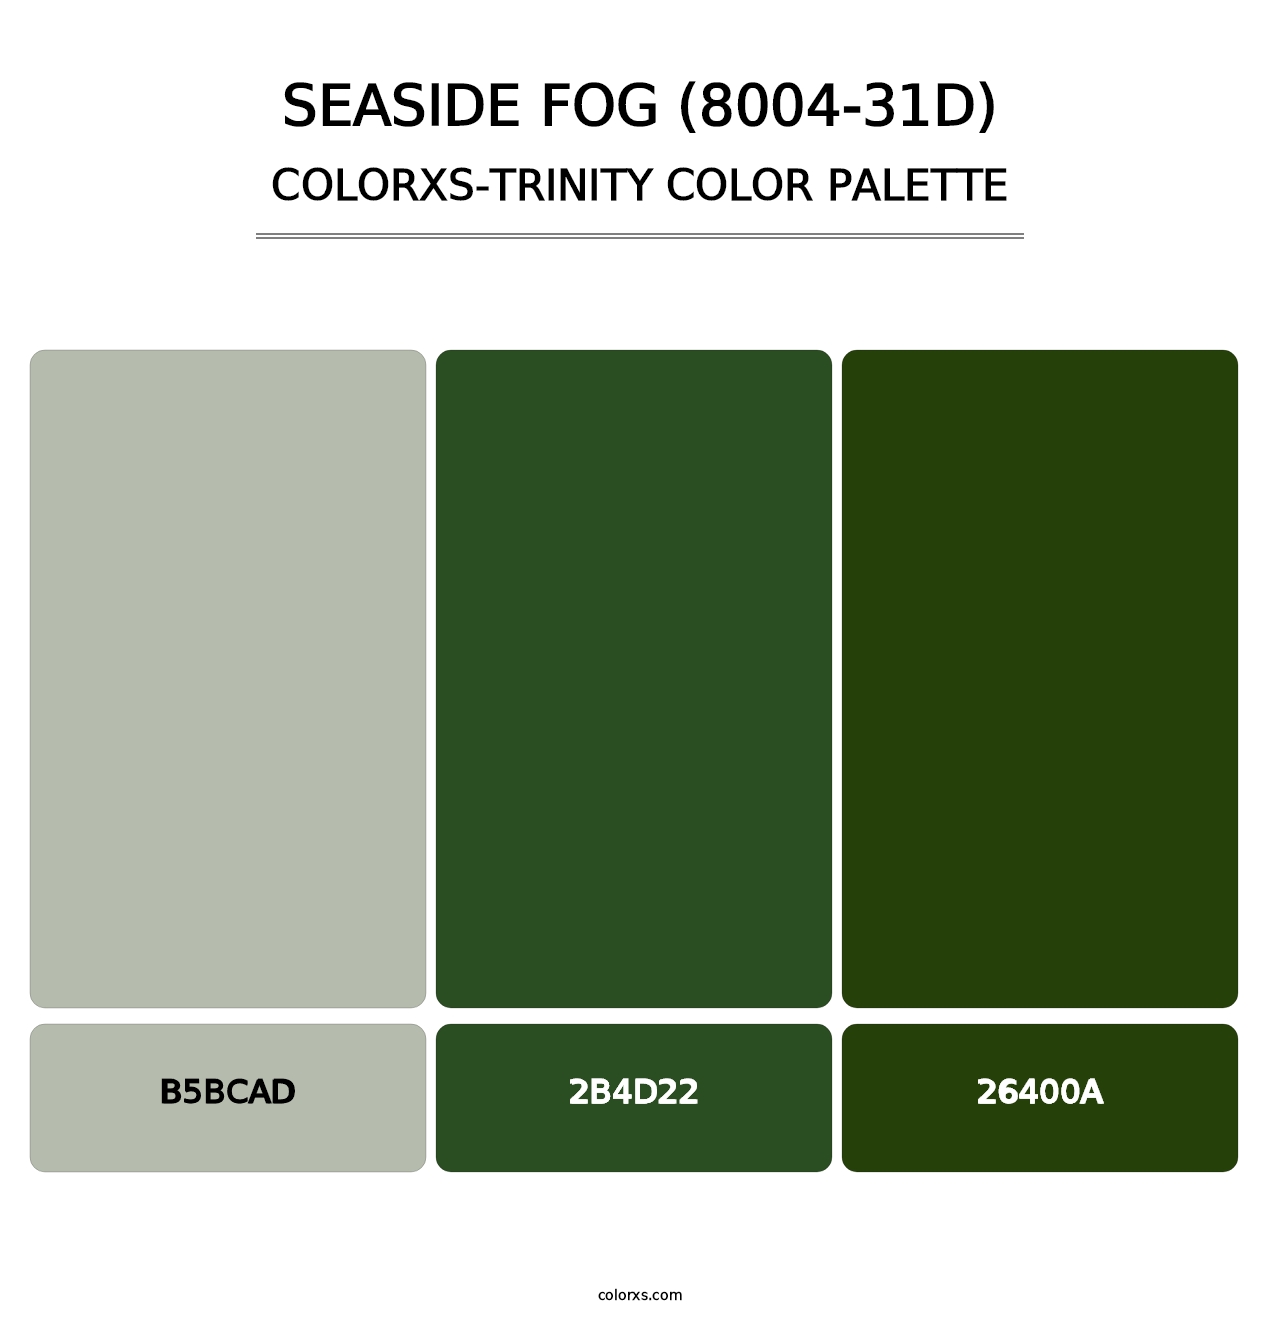 Seaside Fog (8004-31D) - Colorxs Trinity Palette